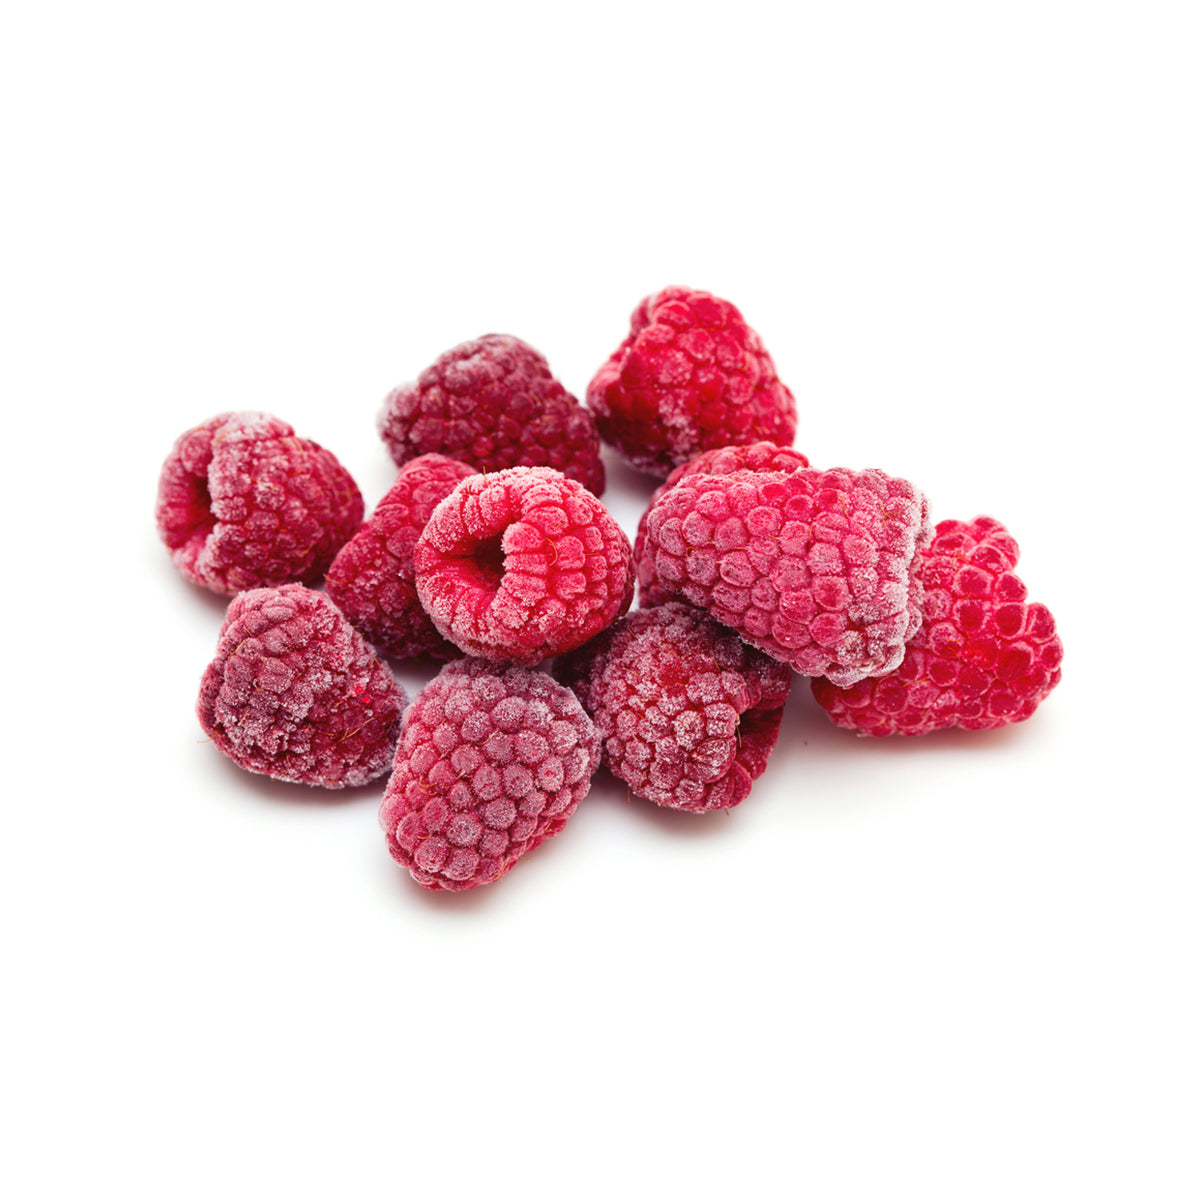 BoxNCase Frozen Organic Raspberries